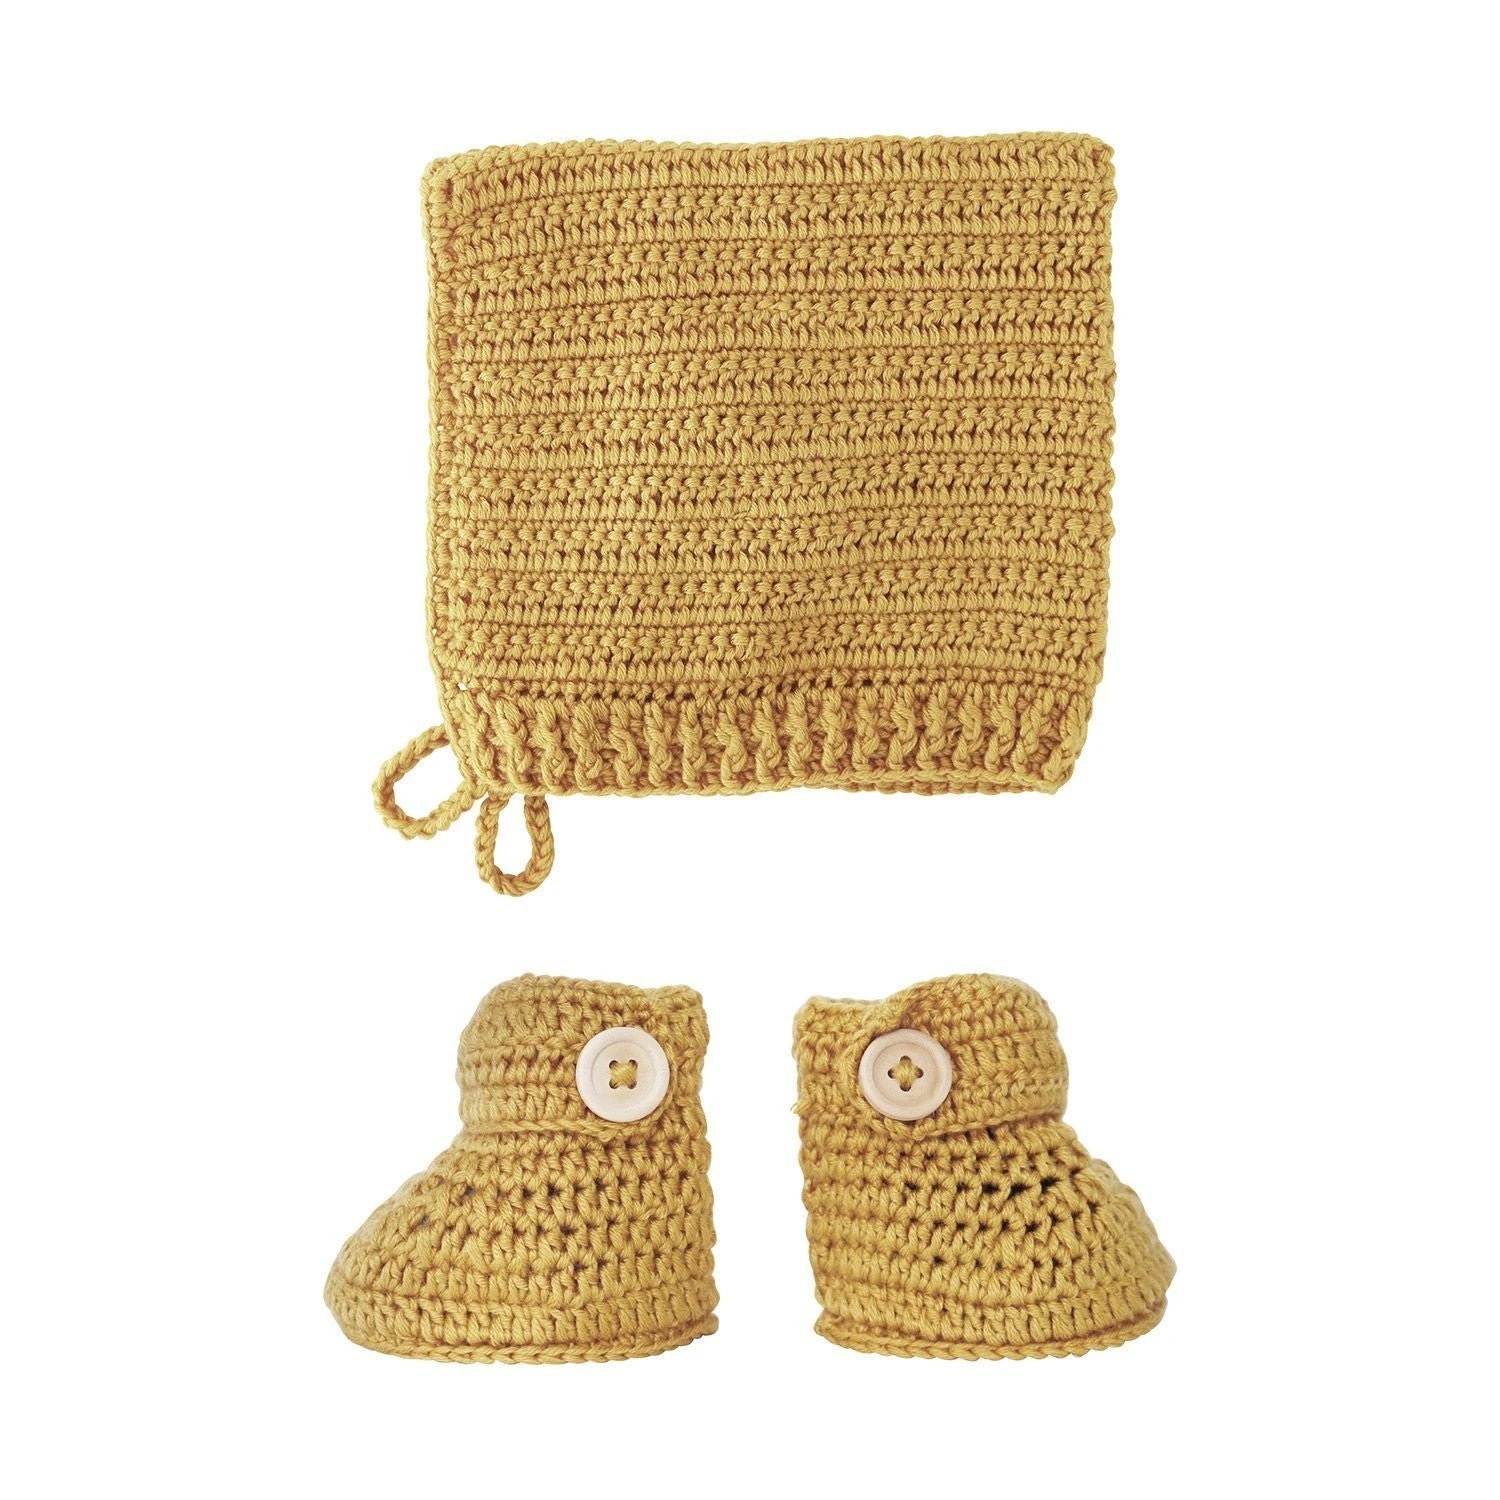 Handmade Crochet Bonnet & Bootie Set - Turmeric -The Mountain Merchant -OB Designs